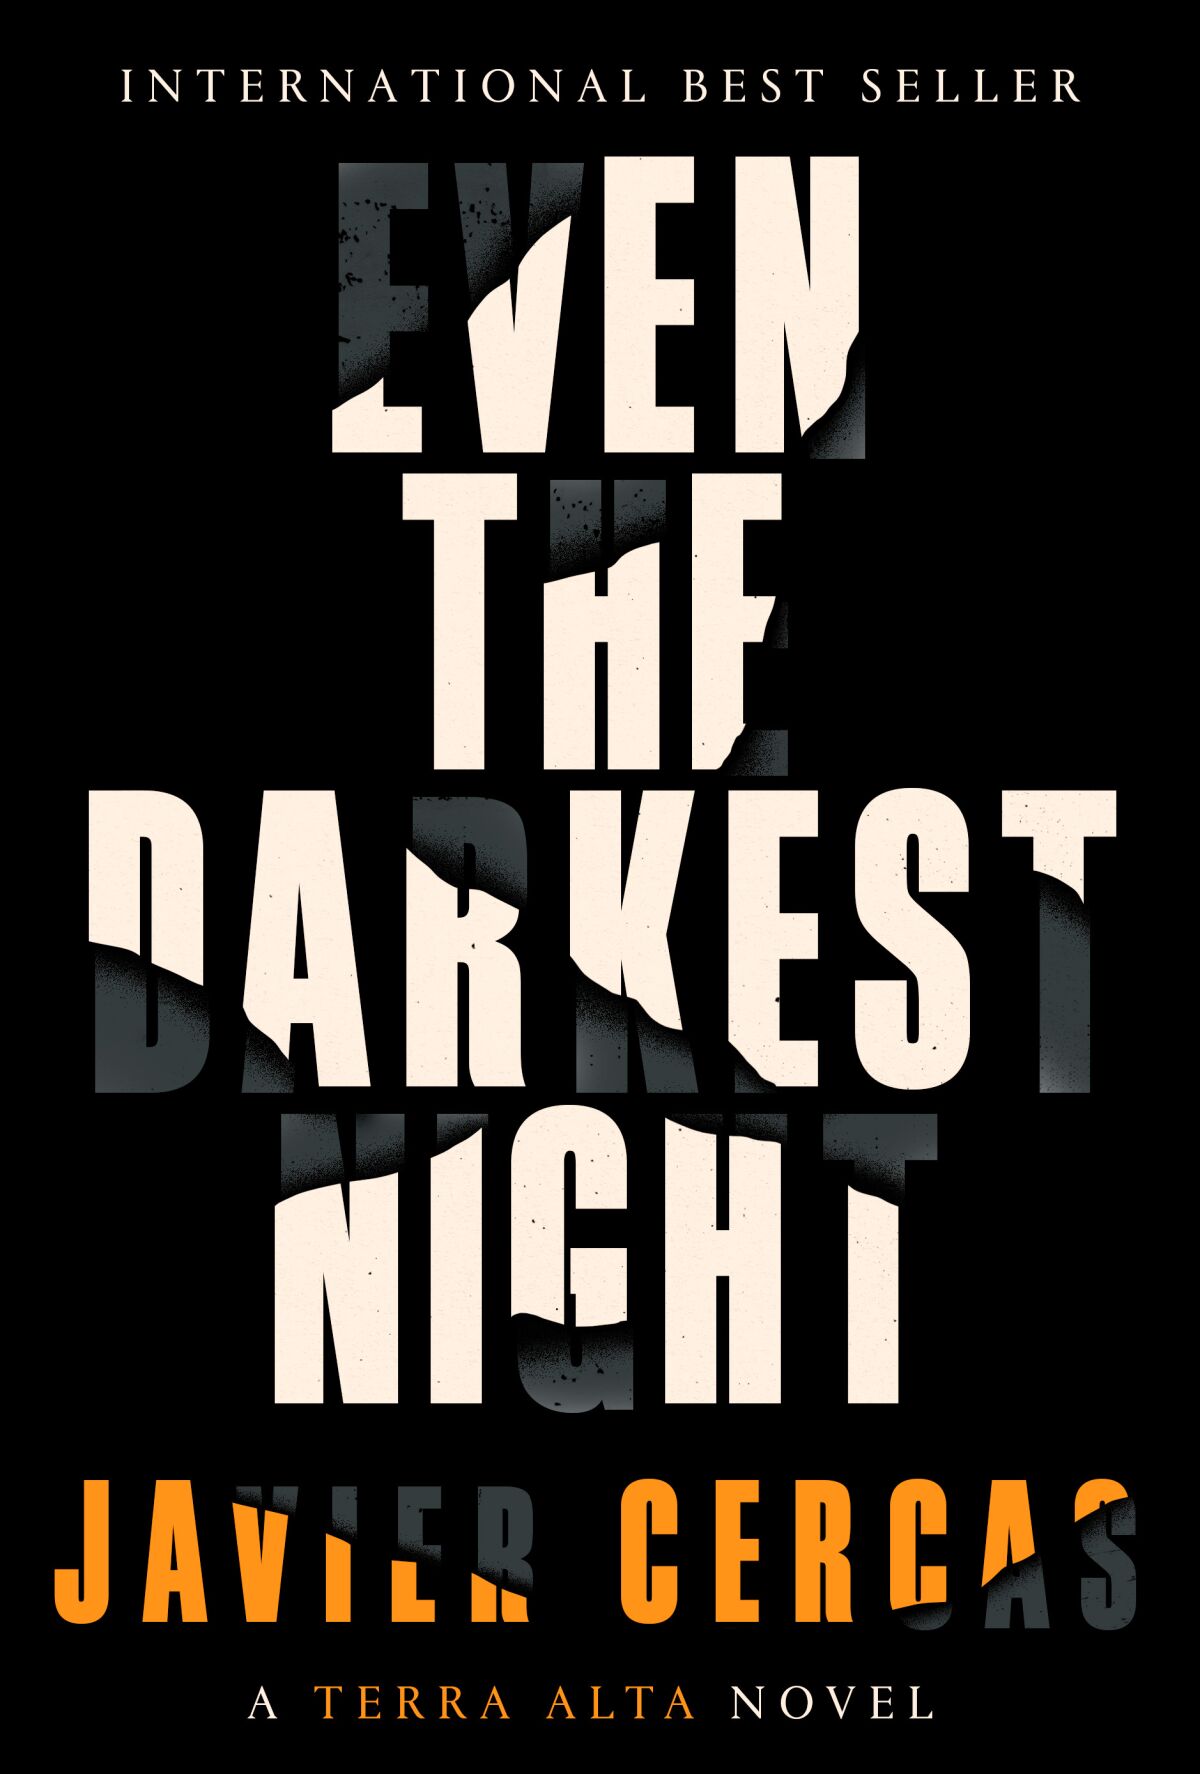 "Even the Darkest Night," by Javier Cercas